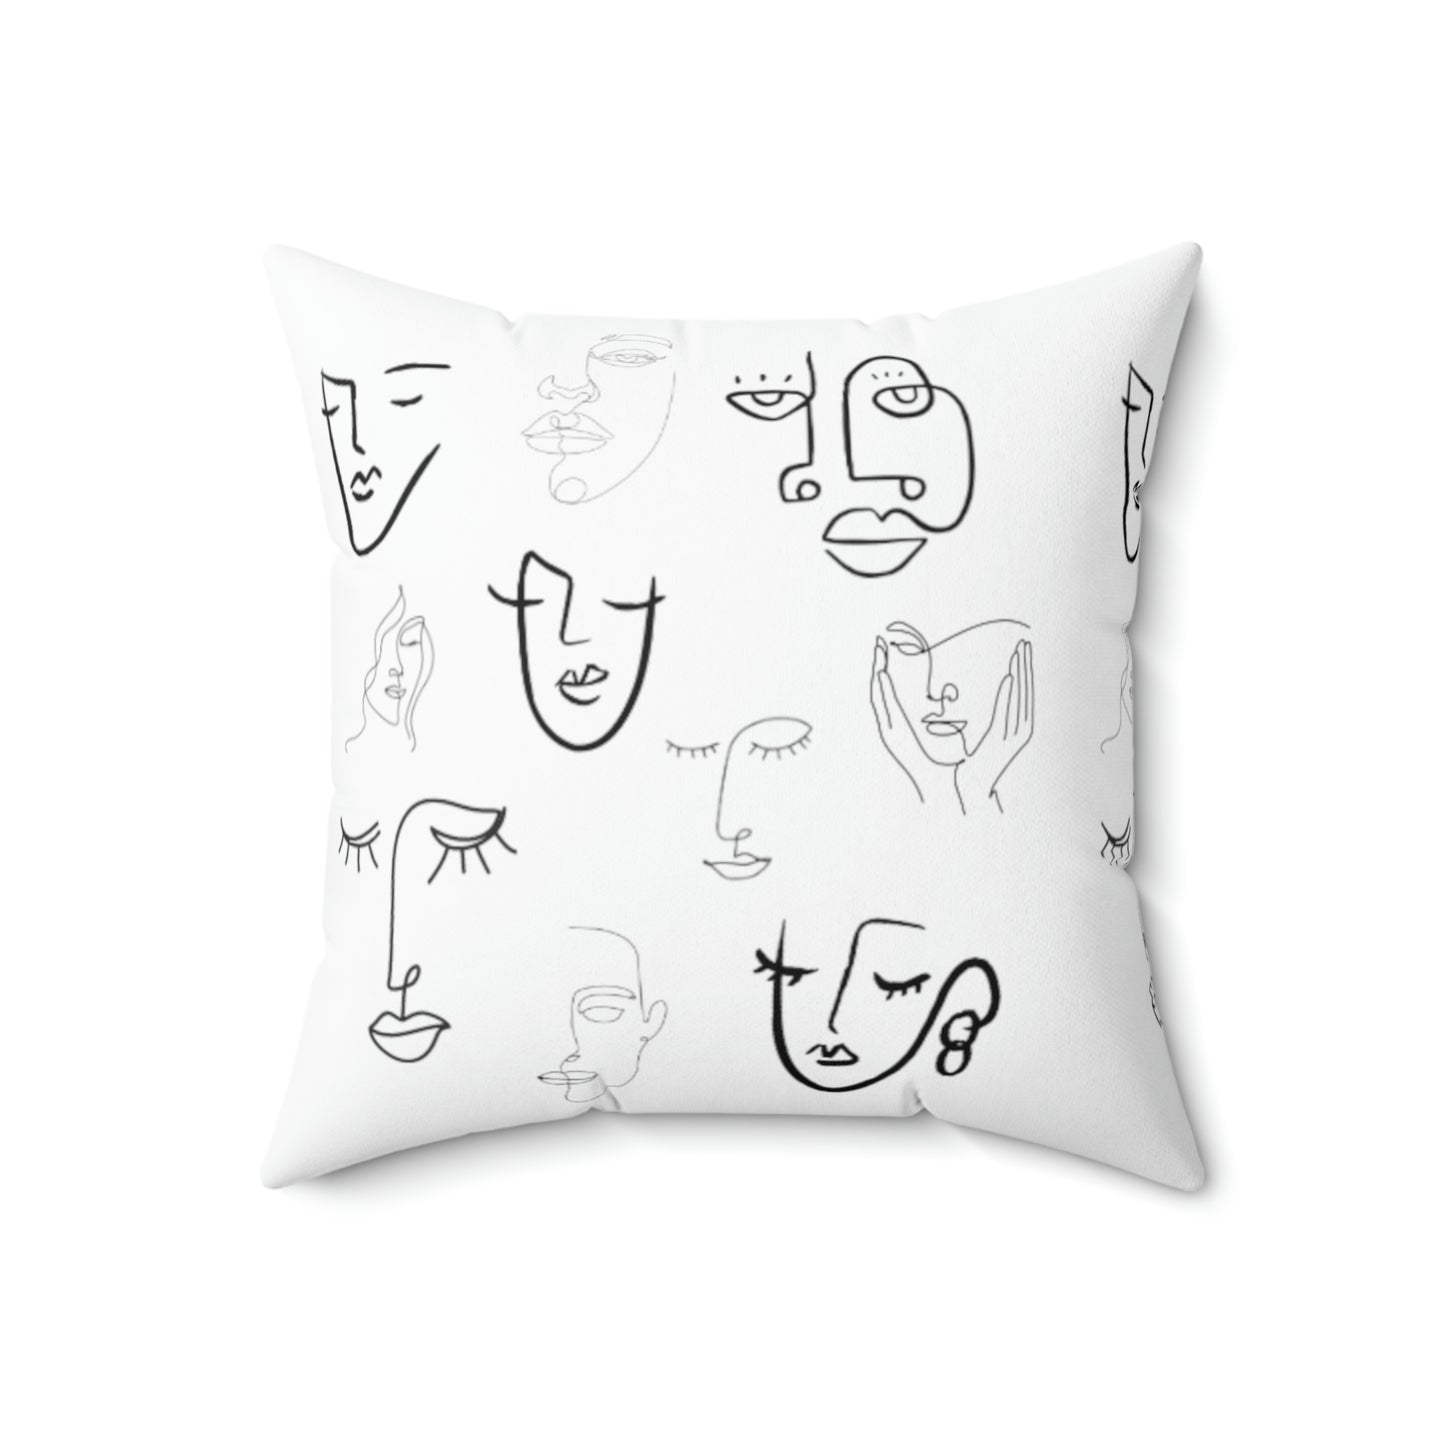 Many Faceswhite - Spun Polyester Square Pillow